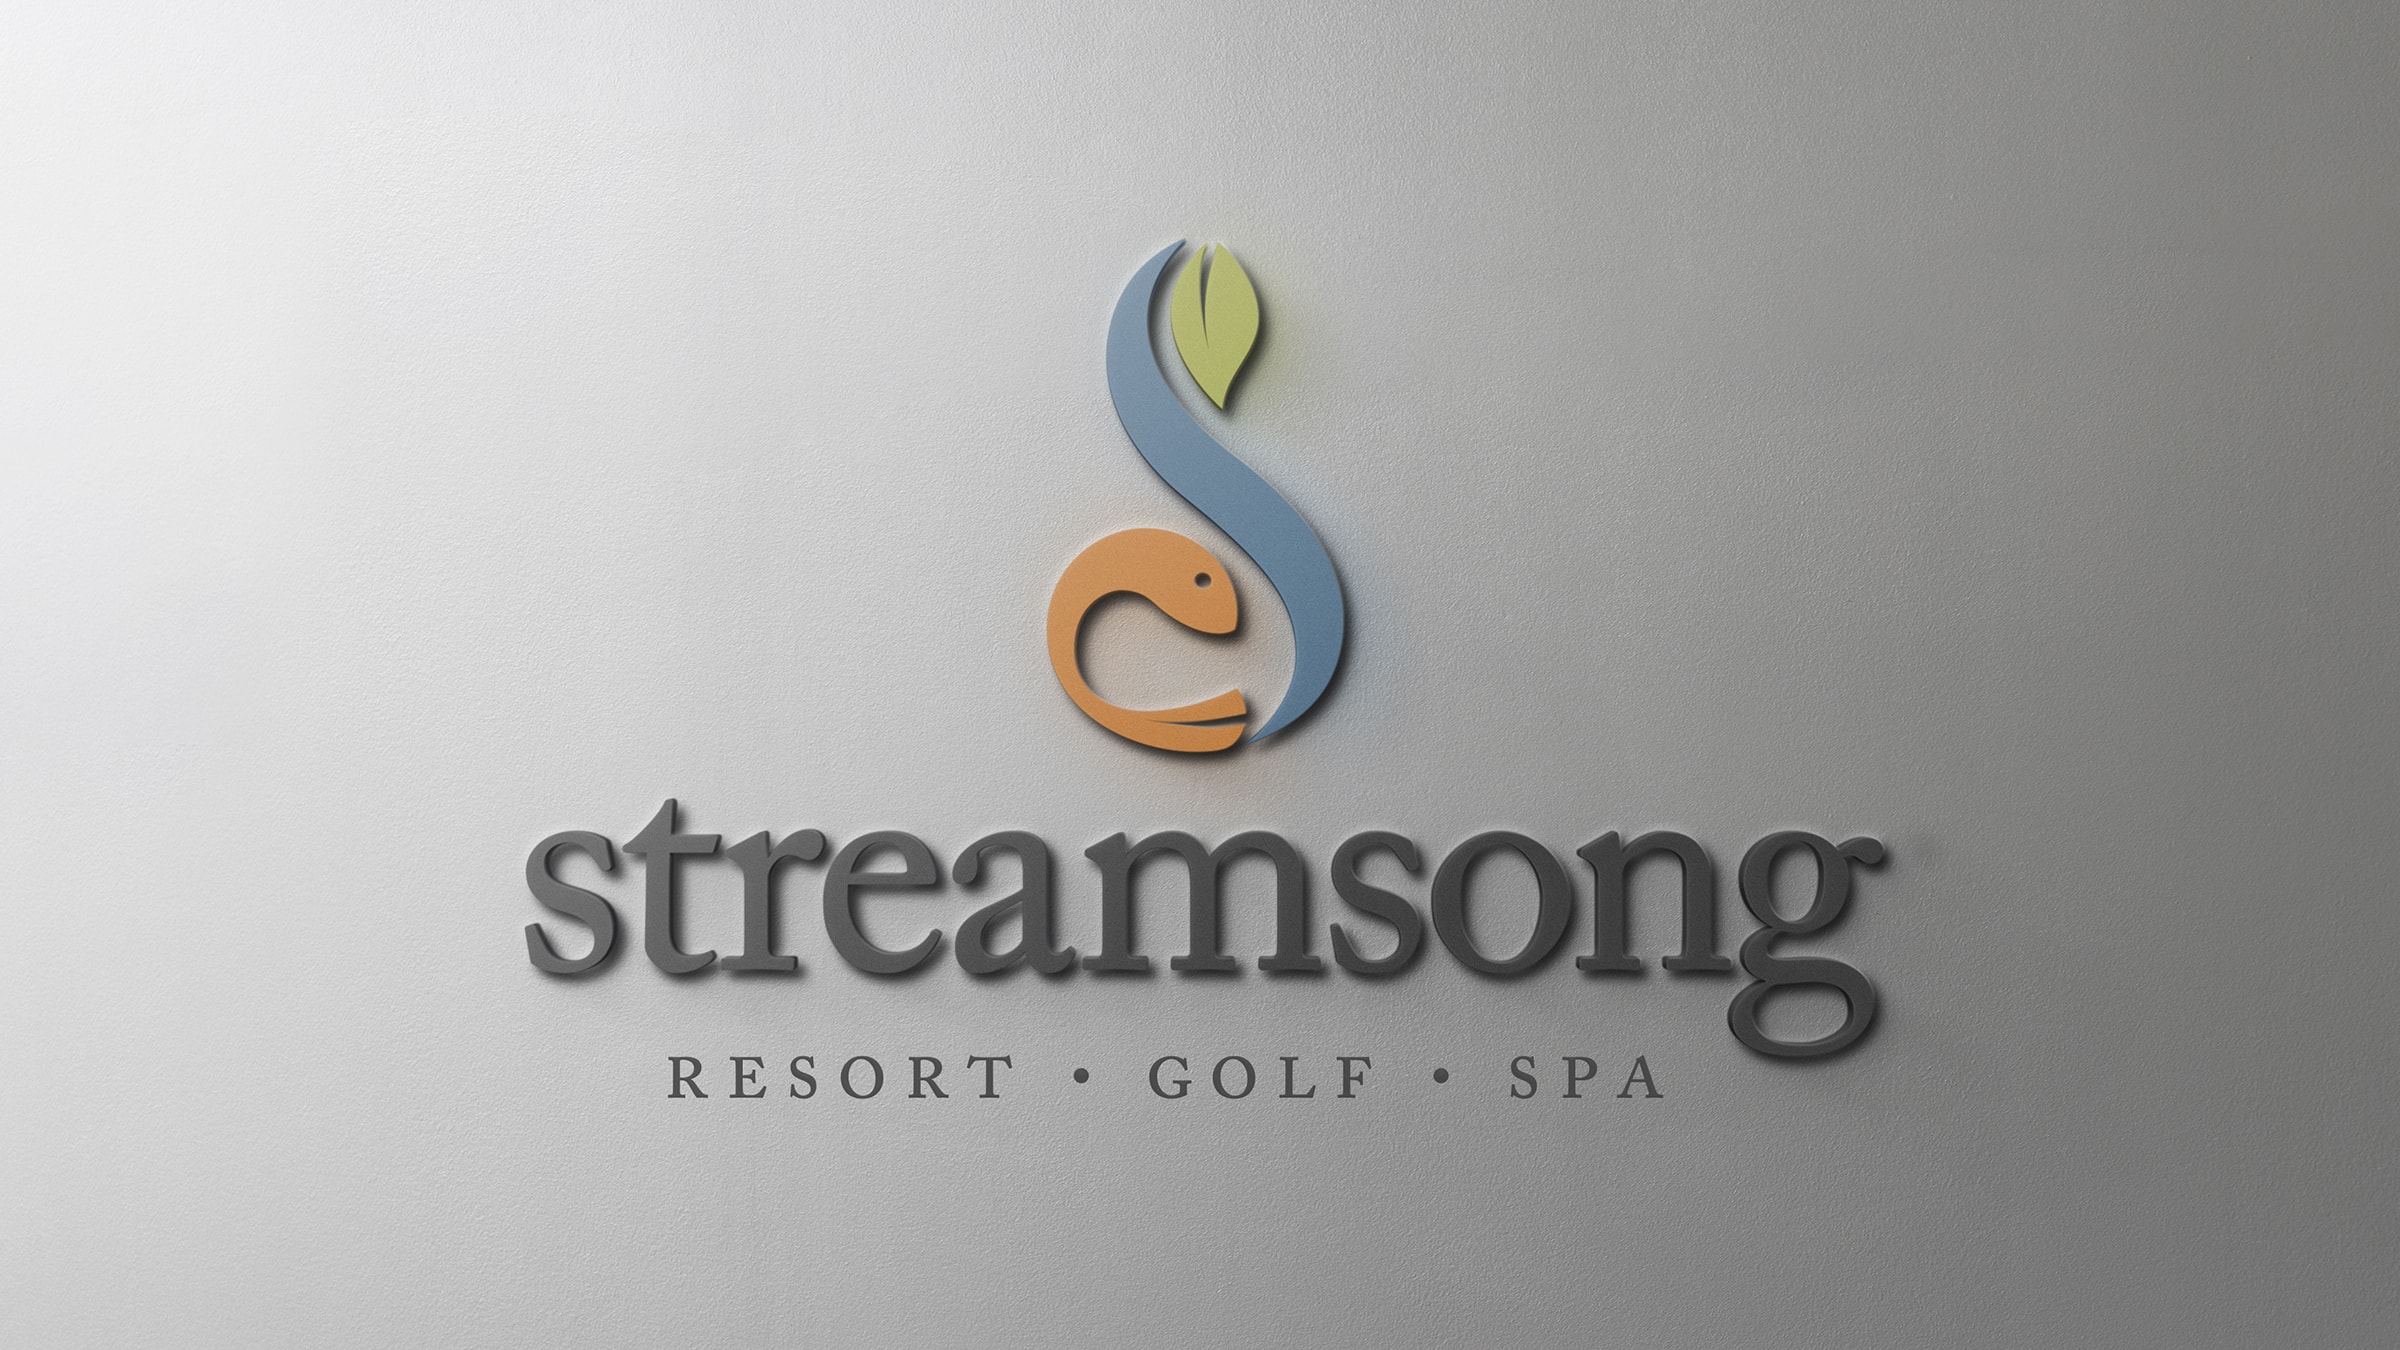 Photo of Streamsong logo on wall